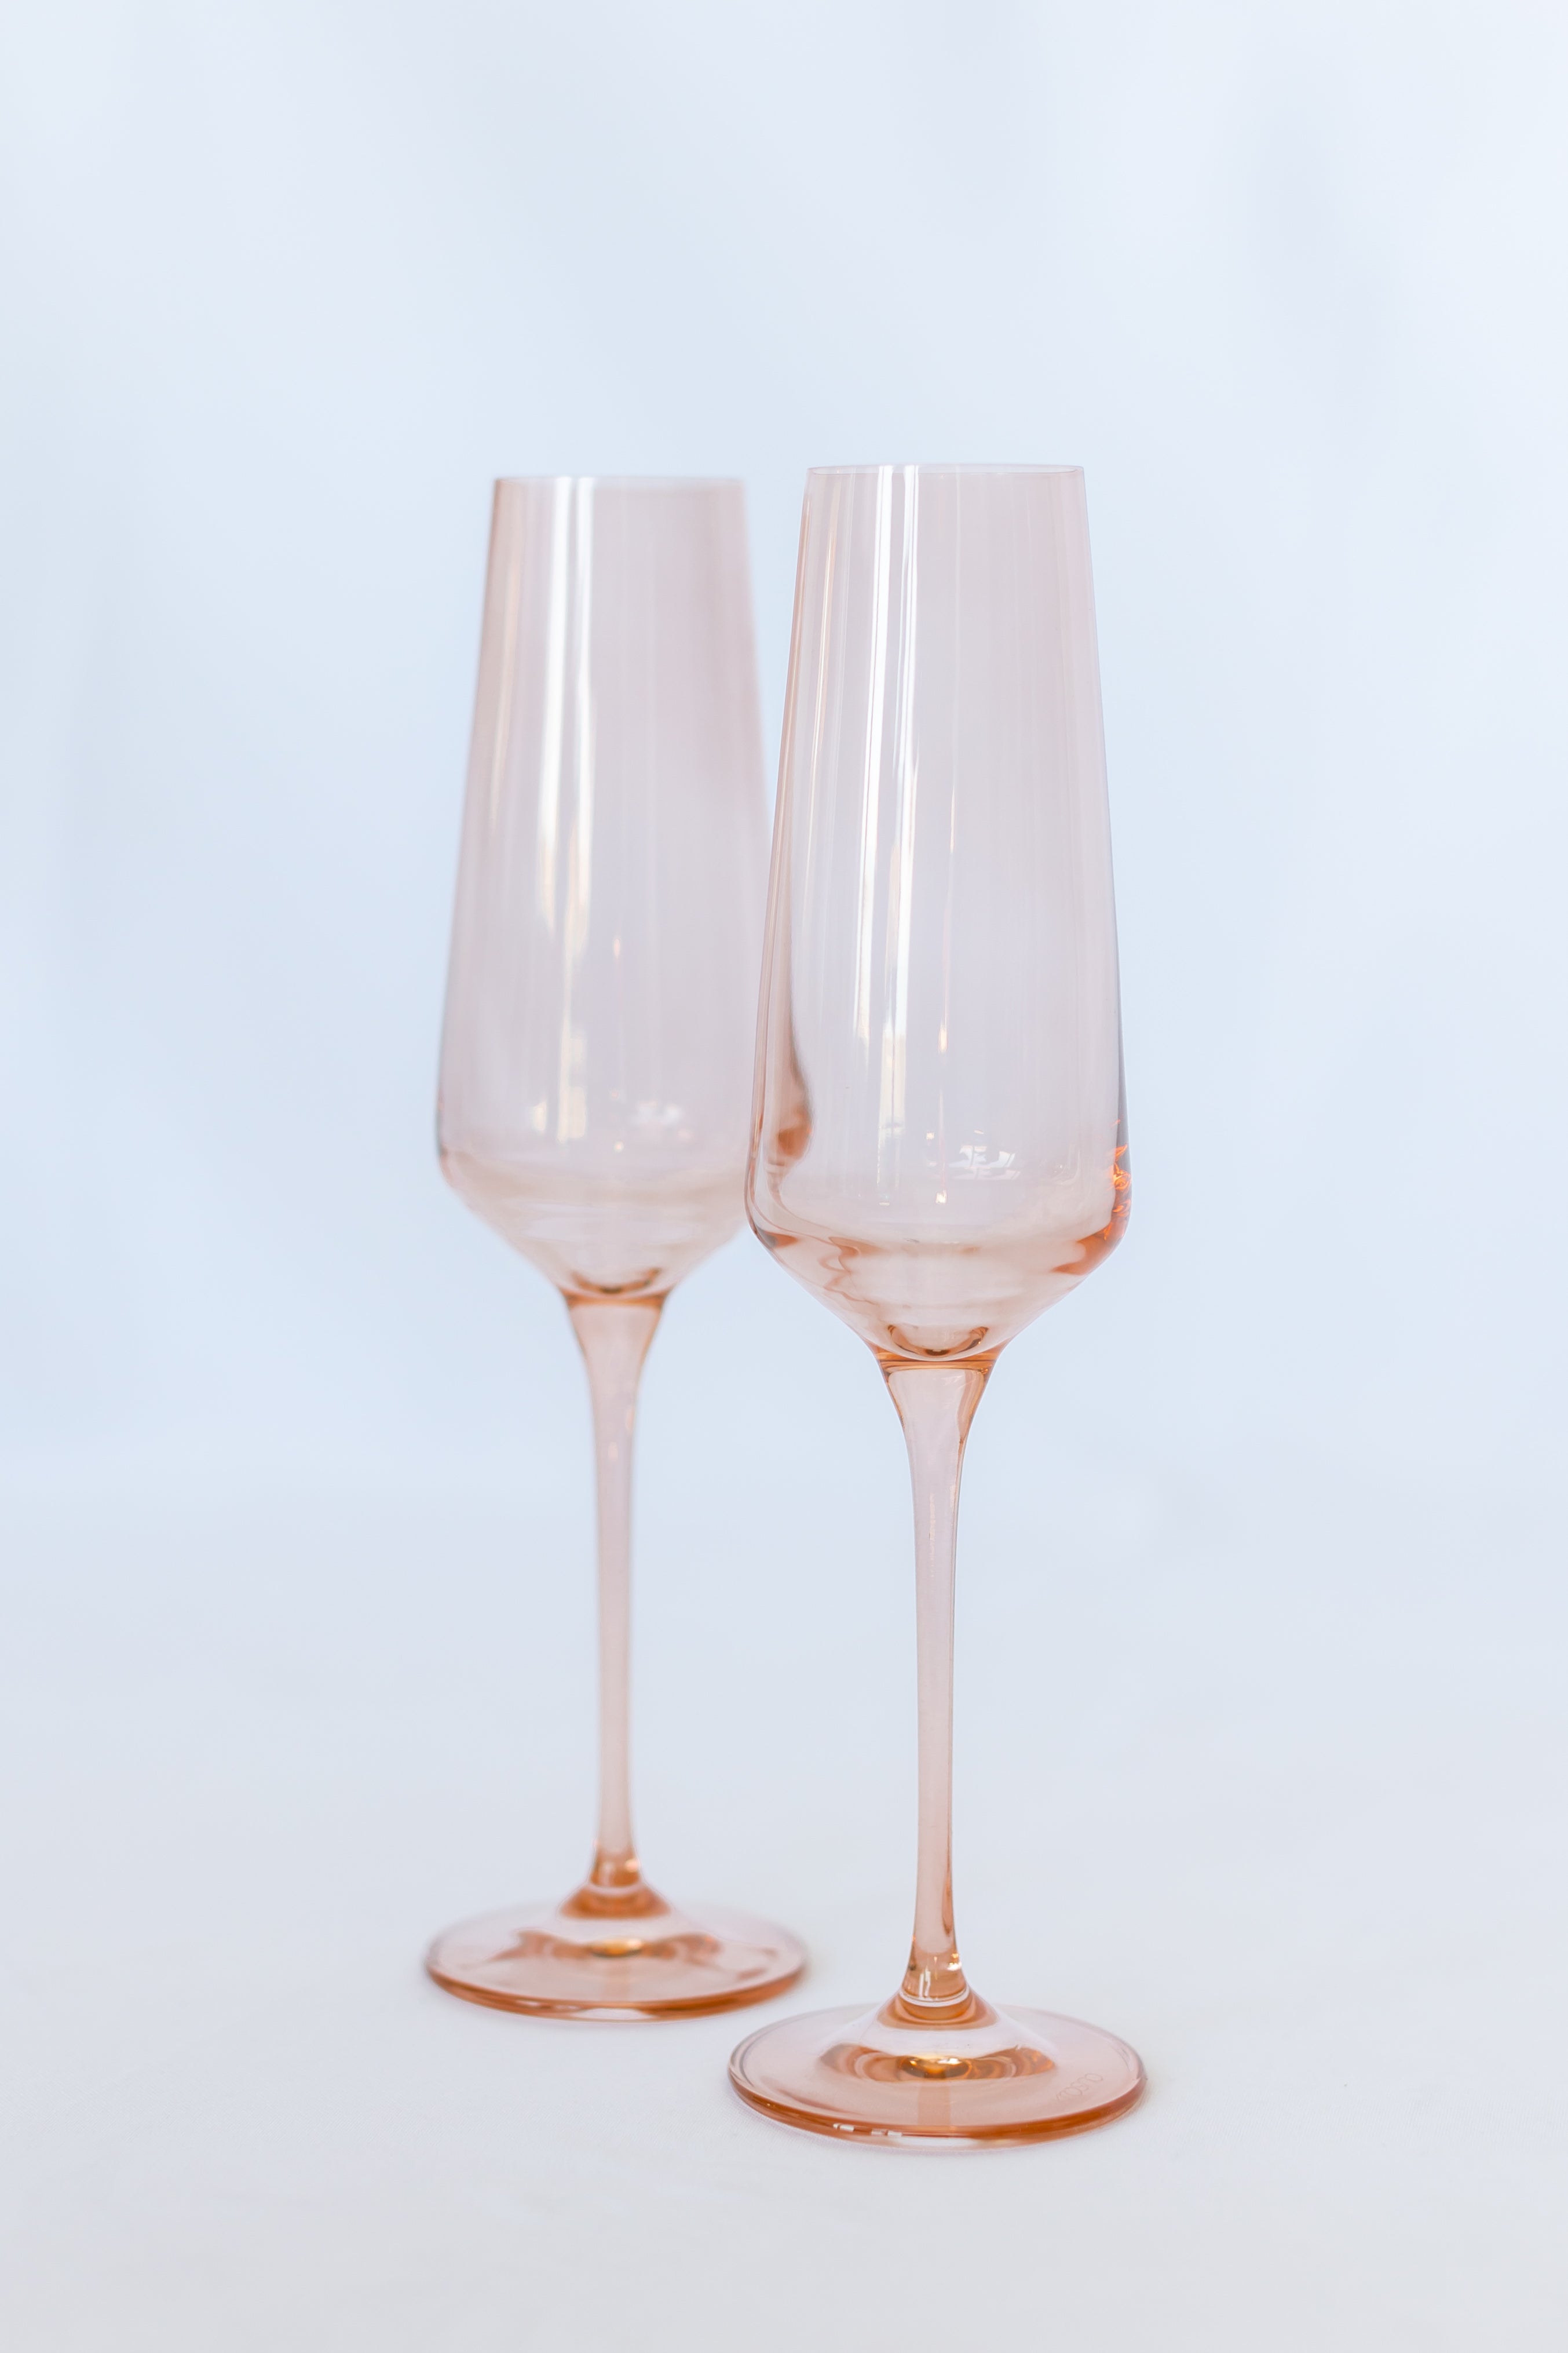 Estelle Colored Champagne Flute - Set of 6 {Blush Pink}